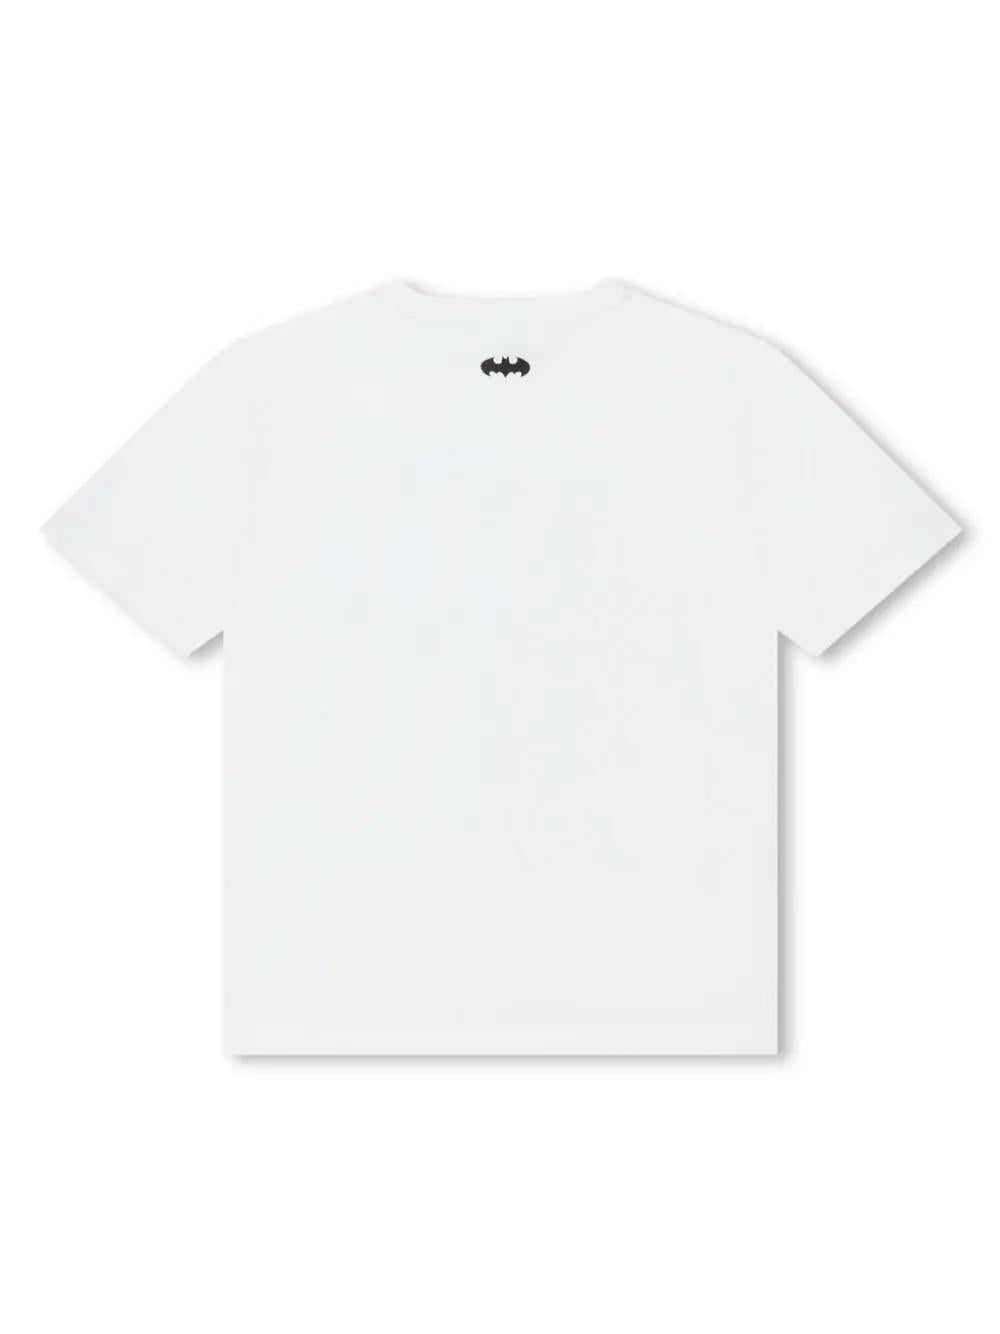 White cotton jersey boy HUGO BOSS x BATMAN t-shirt | Carofiglio Junior